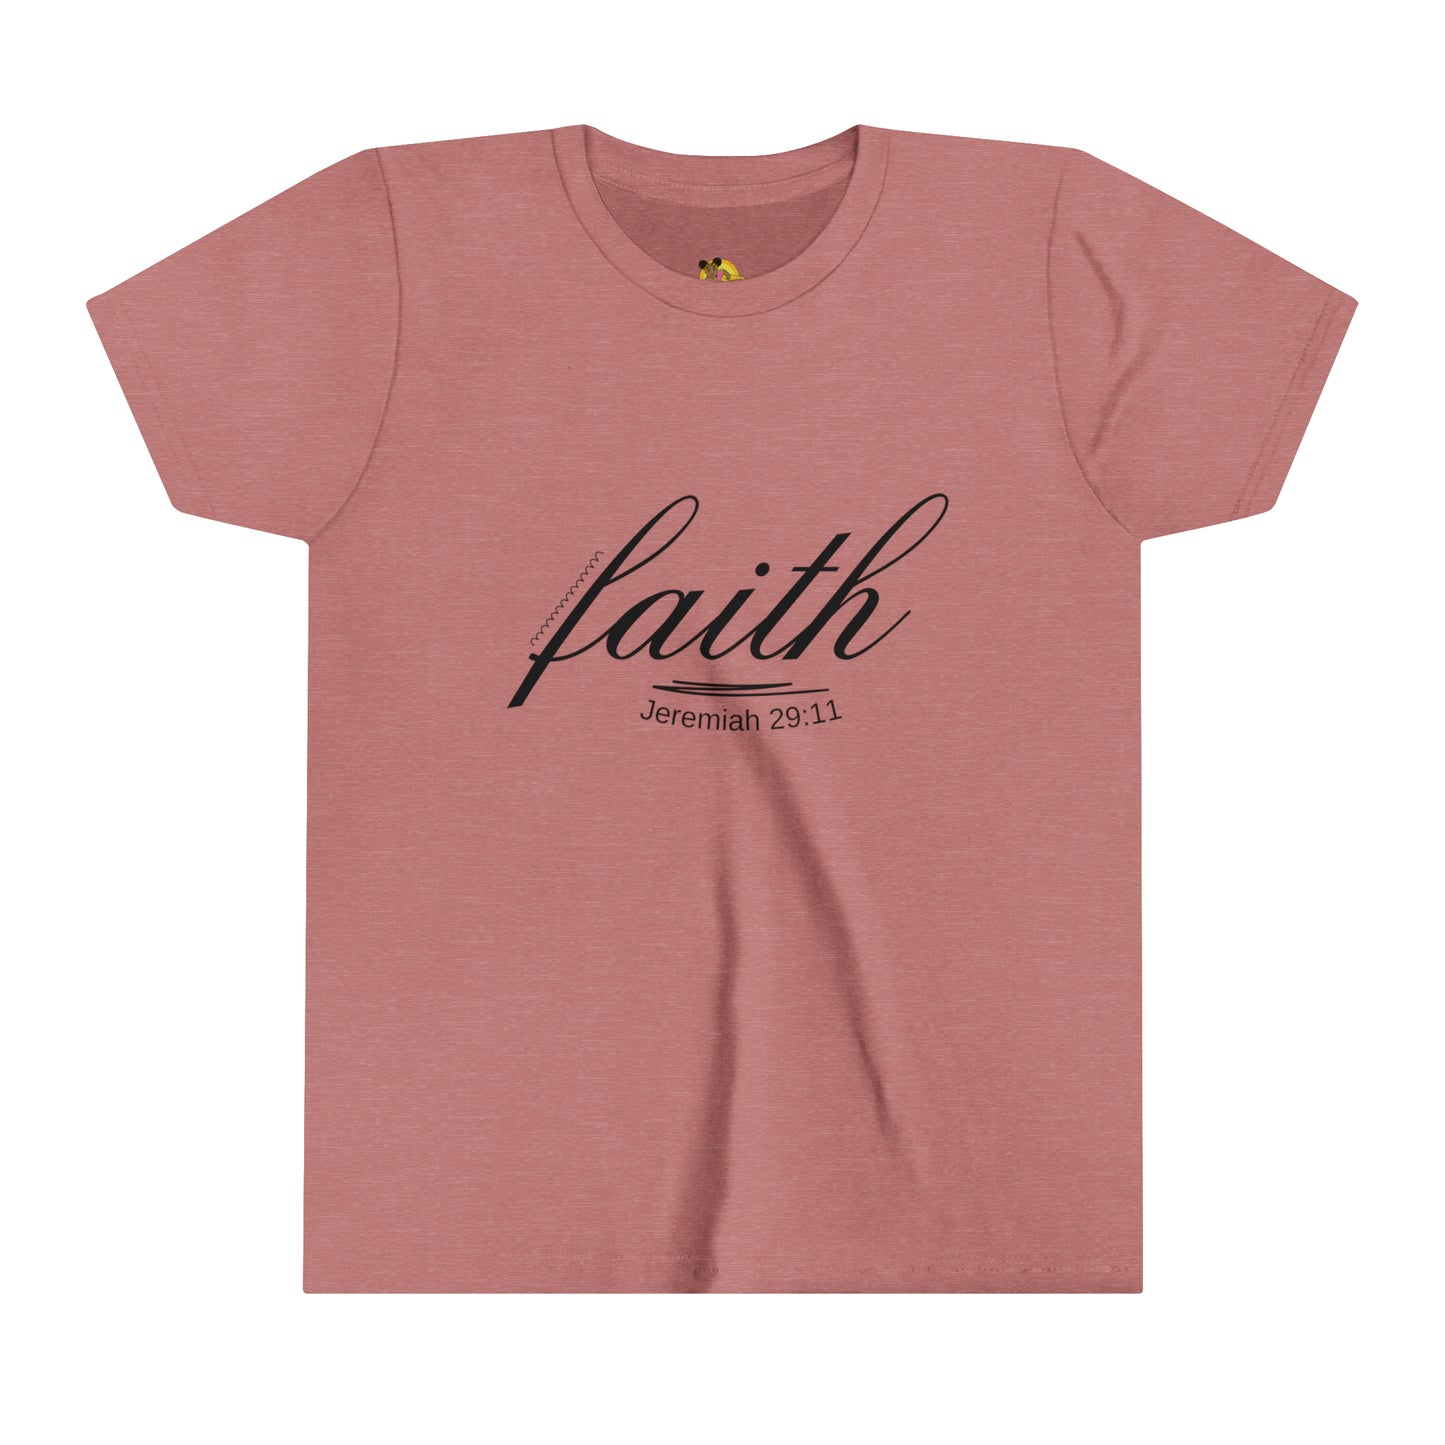 Faith Shines Youth T-shirt